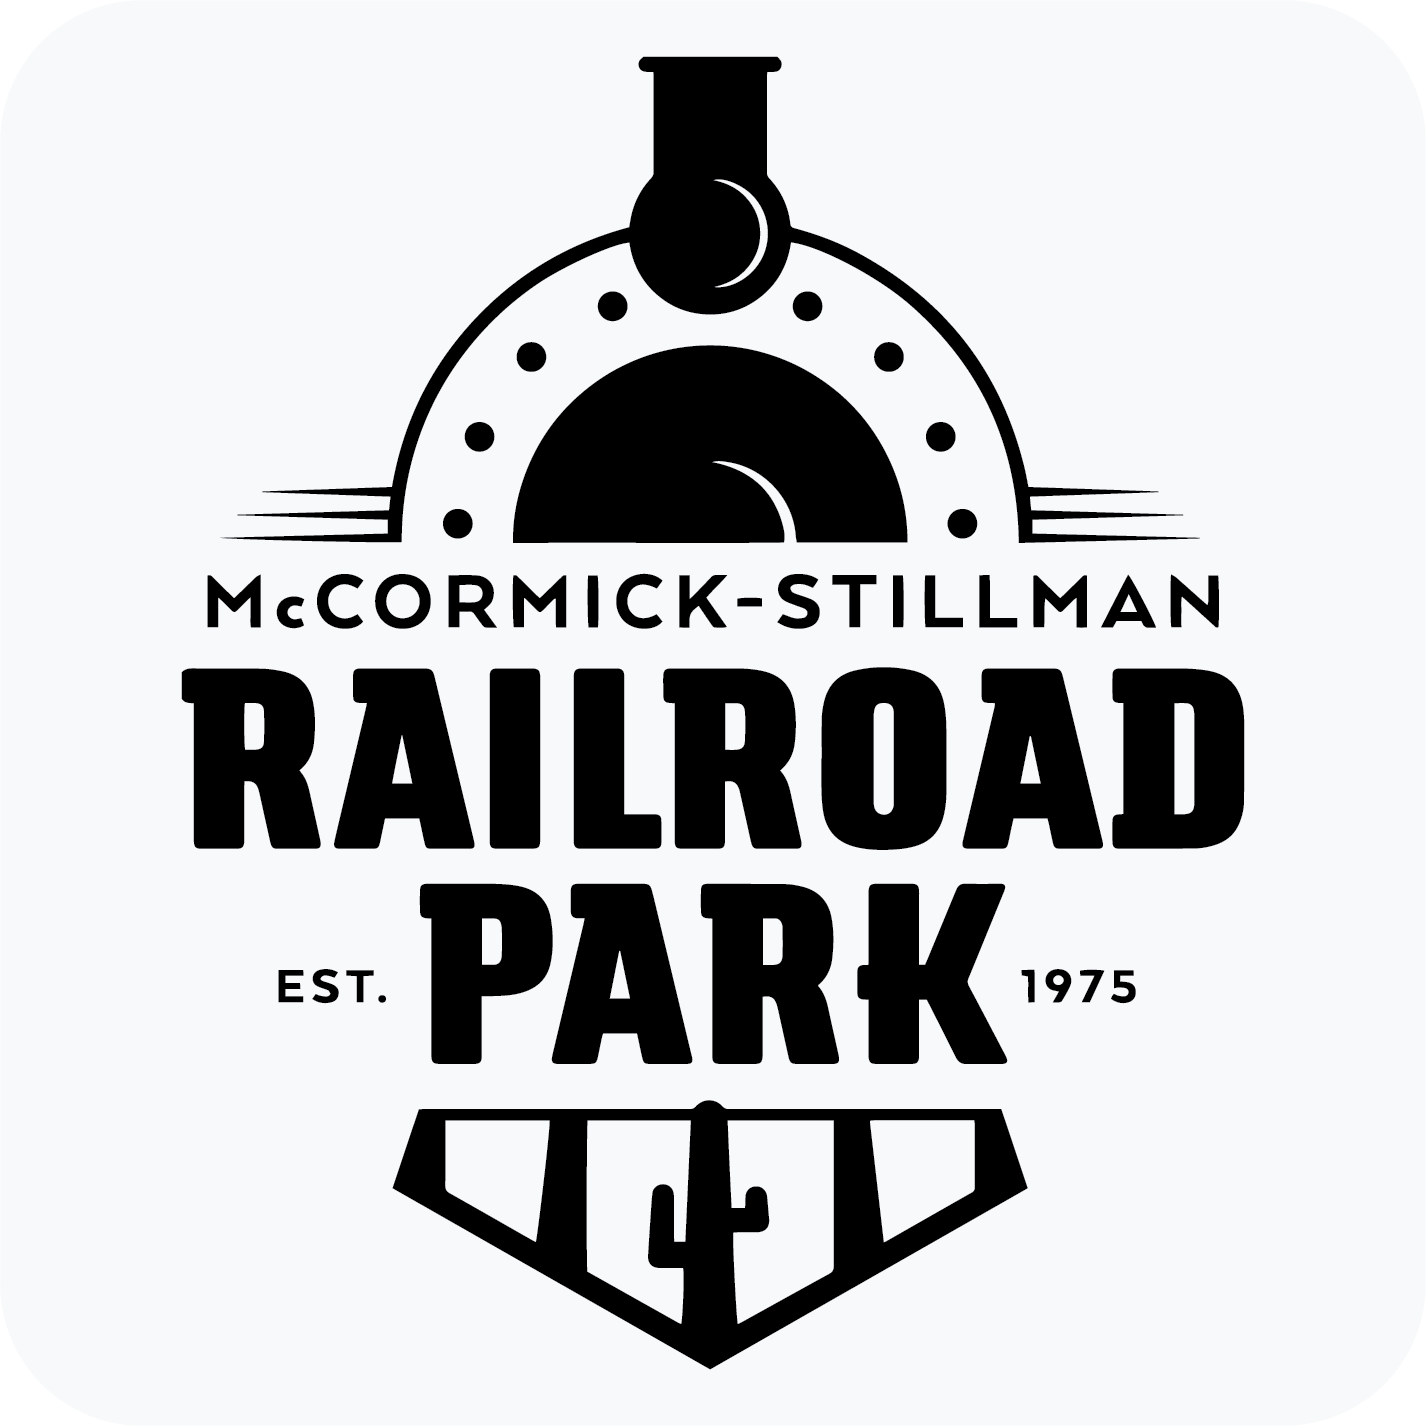 McCormick Stillman Railroad Park